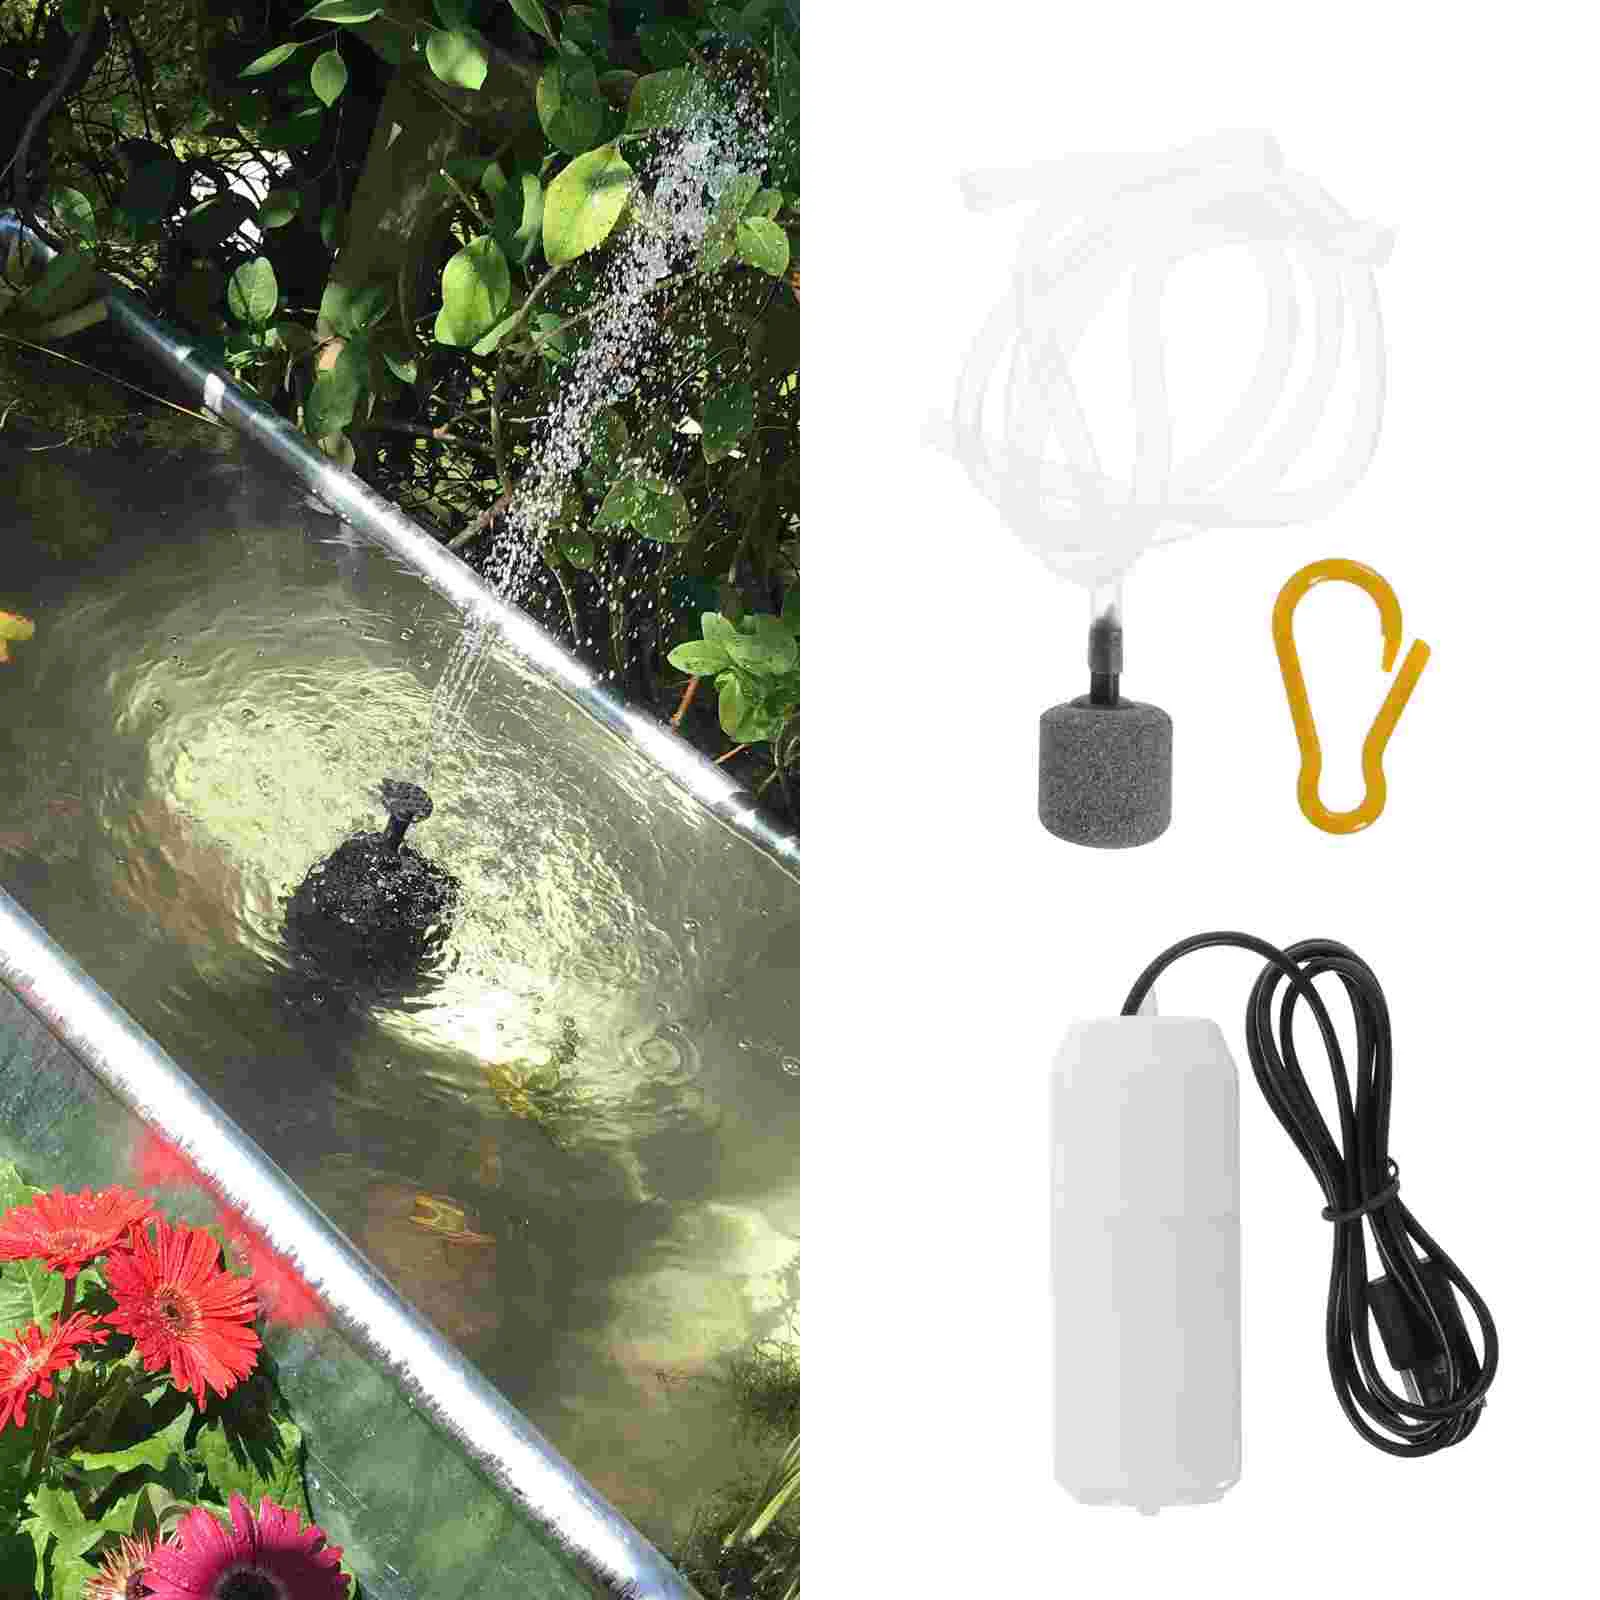 

Pump Air Tank Aquarium Aerator Bubbler Water Usb Submersible Accessories Supply Filter Tube Accessory